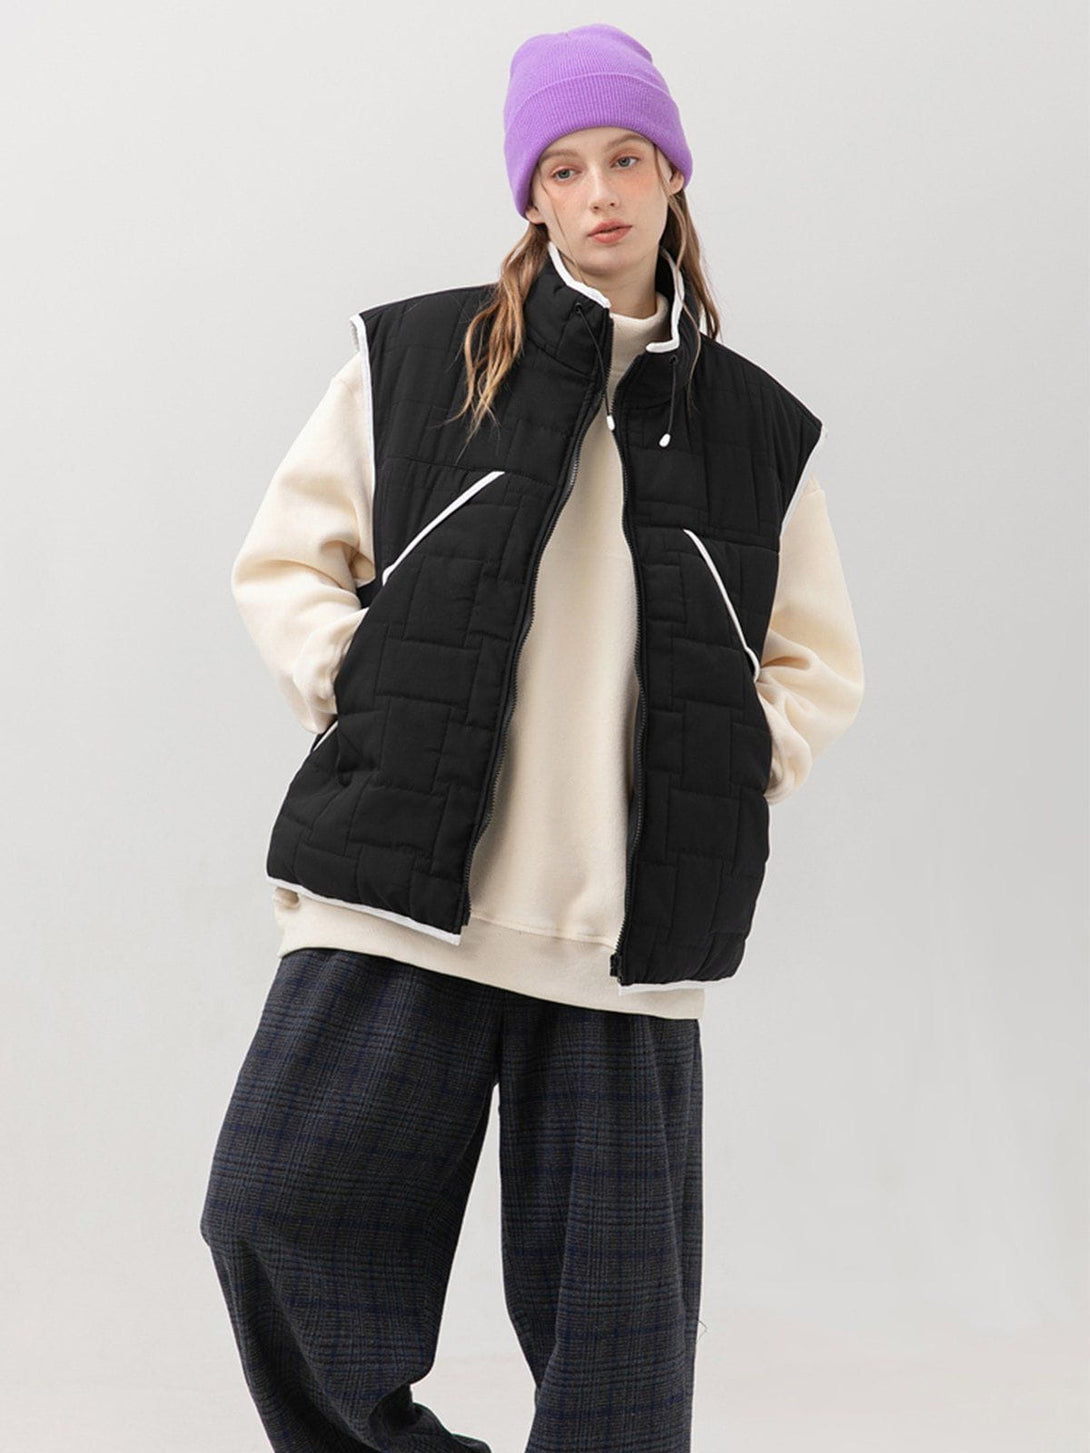 Levefly - Solid Color Puffer Vest Gilet - Streetwear Fashion - levefly.com